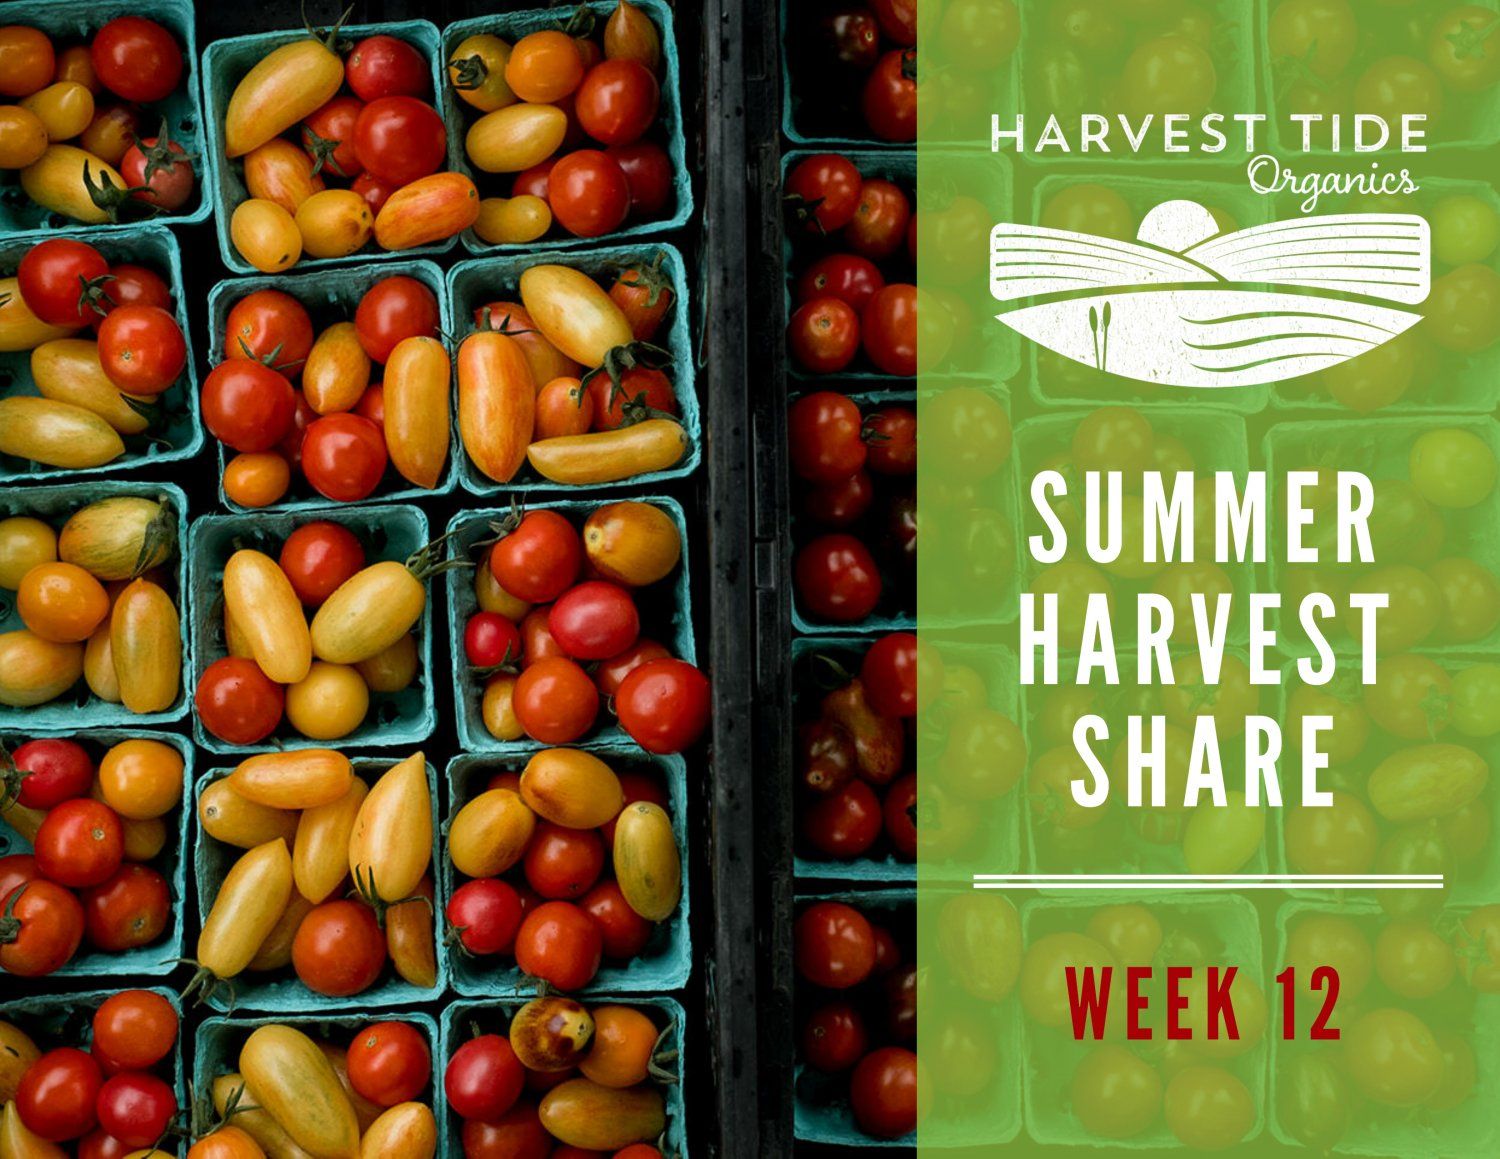 Next Happening: Summer Harvest Share - Week 12